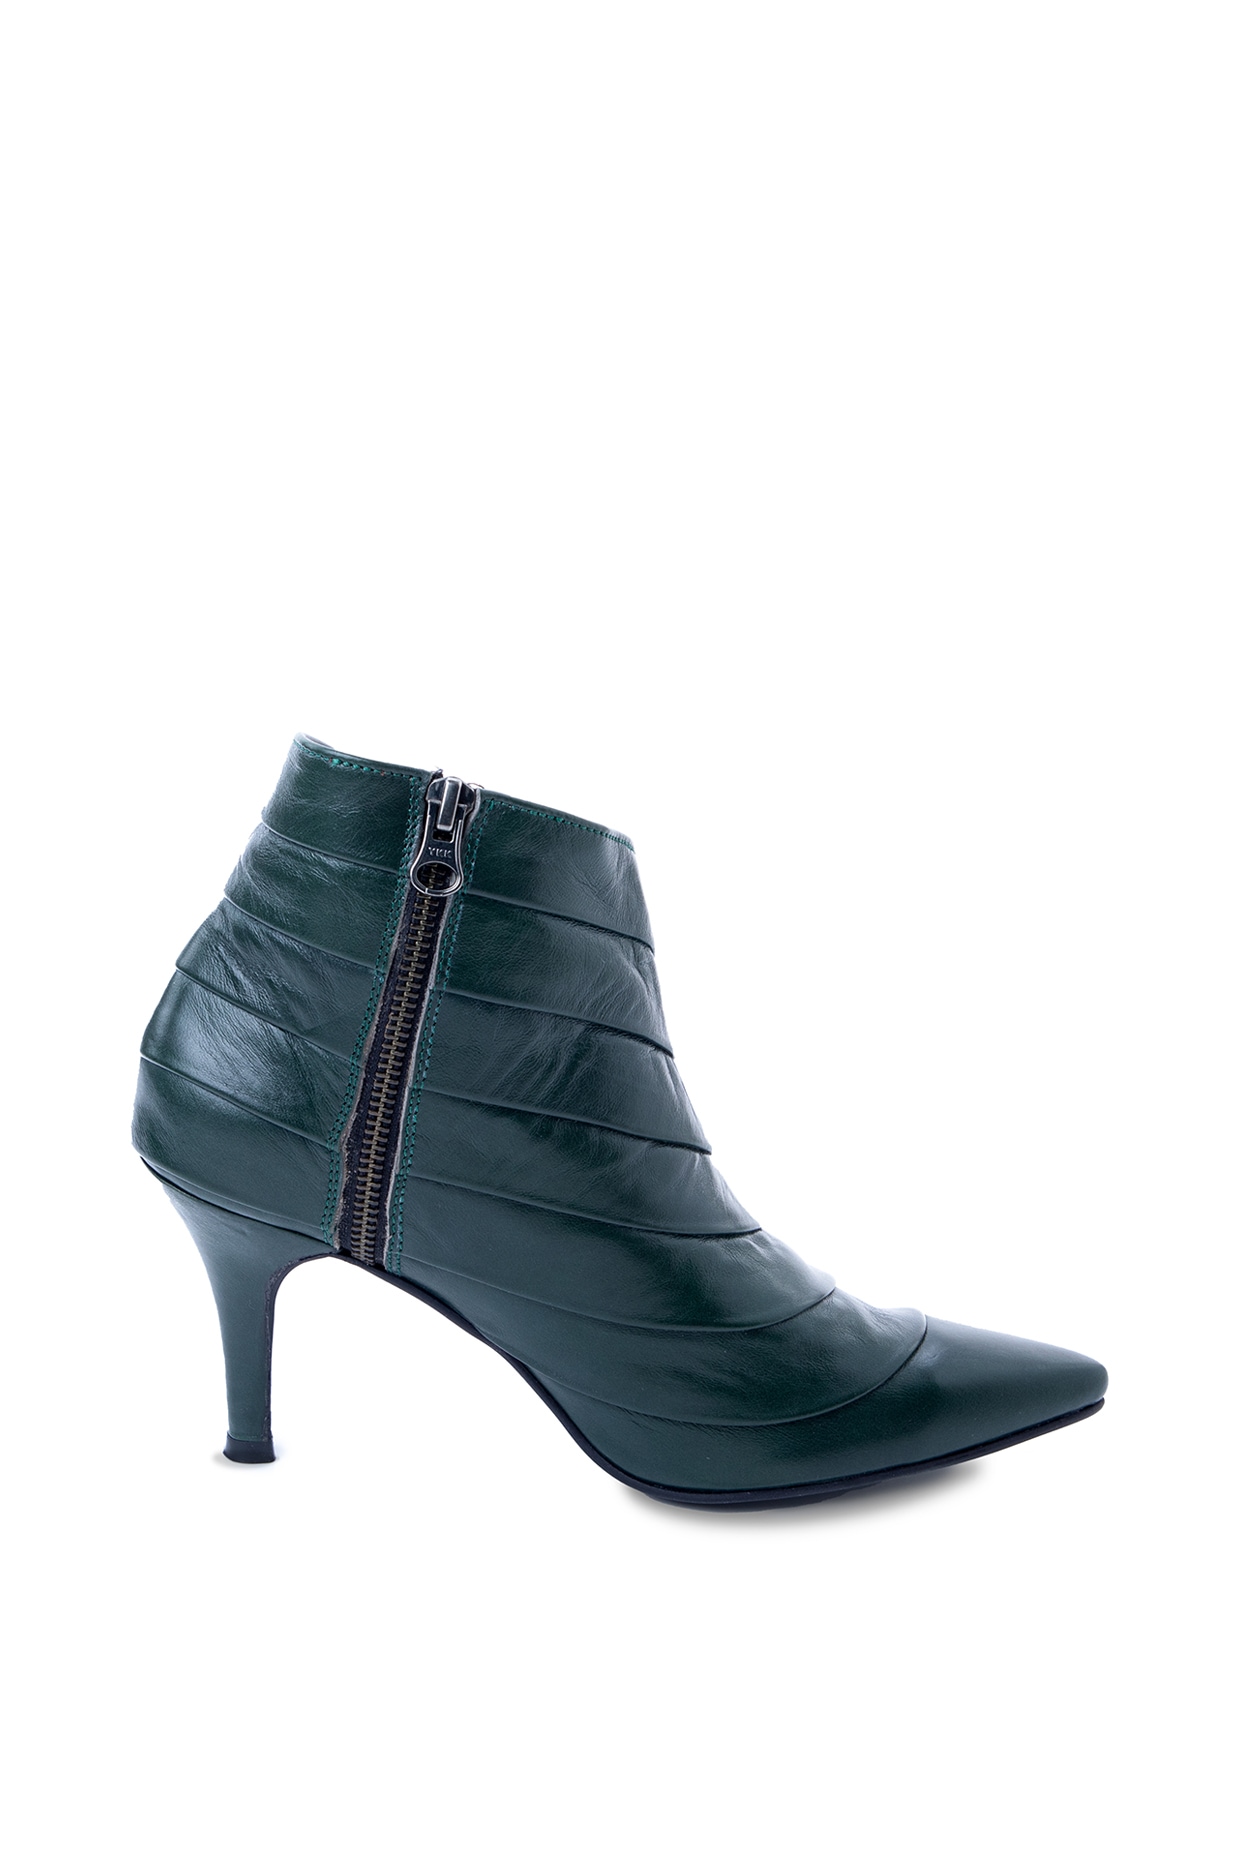 Vintage Garolini black Italian leather high heel shoes open toe pump cutout  9.5N | eBay